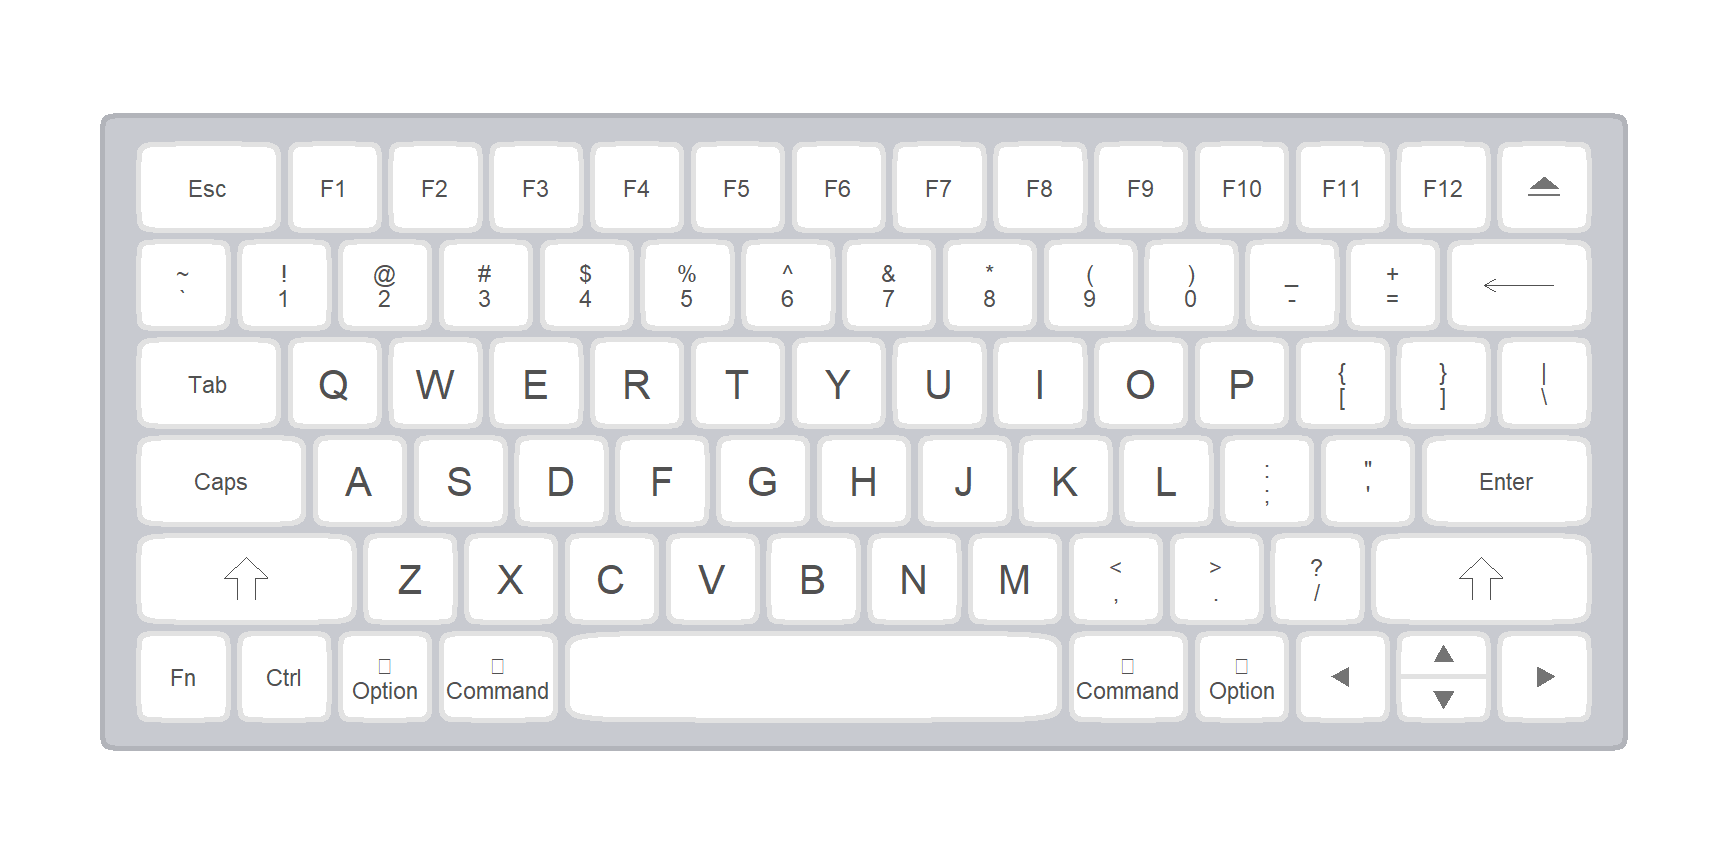 Mac keyboard in ggplot2